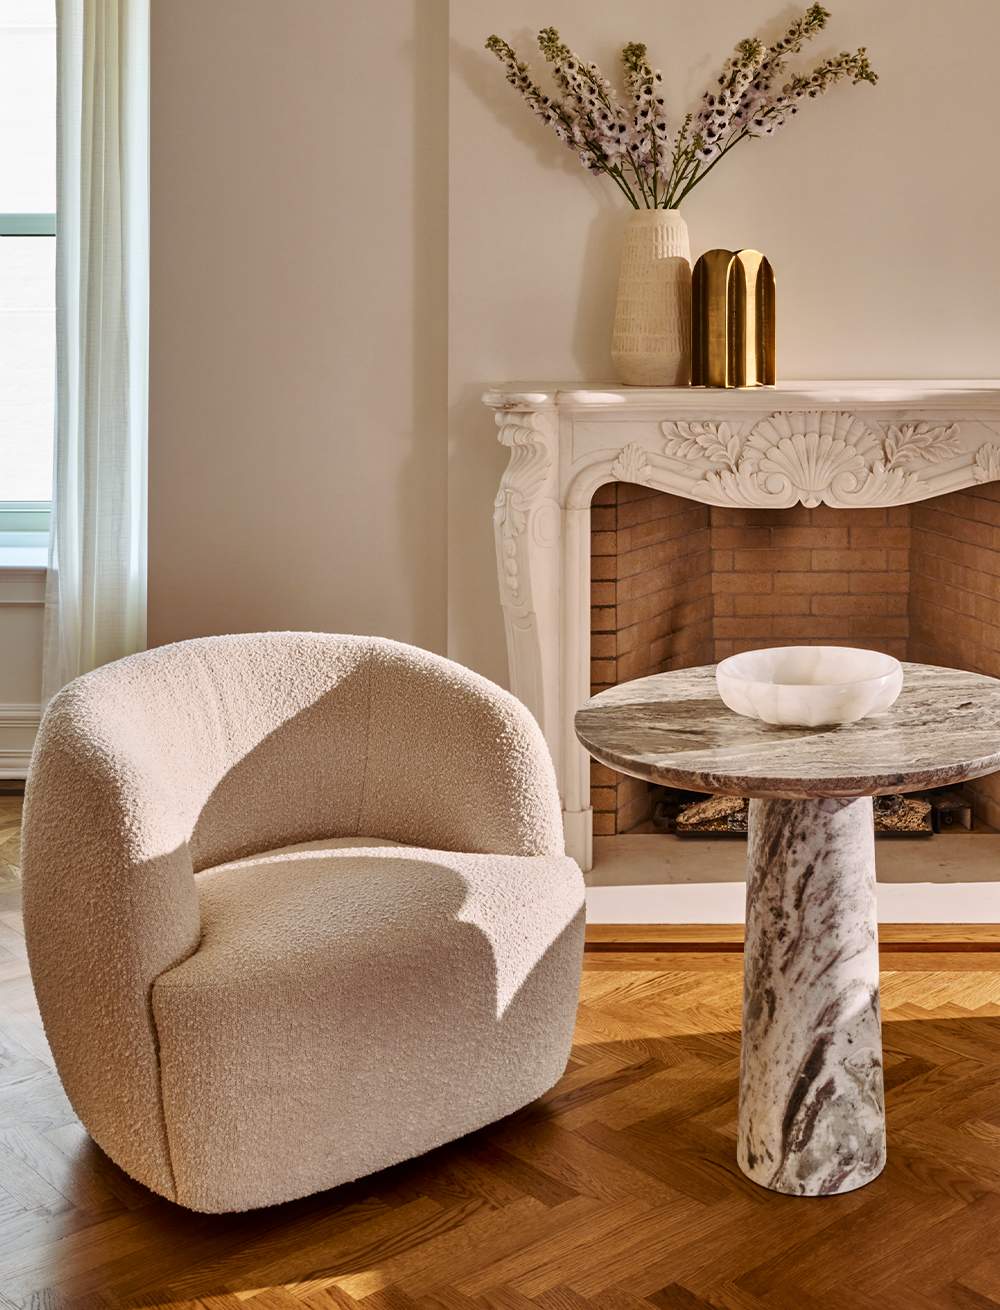 Modern Furniture Store & Contemporary Home Decor Online